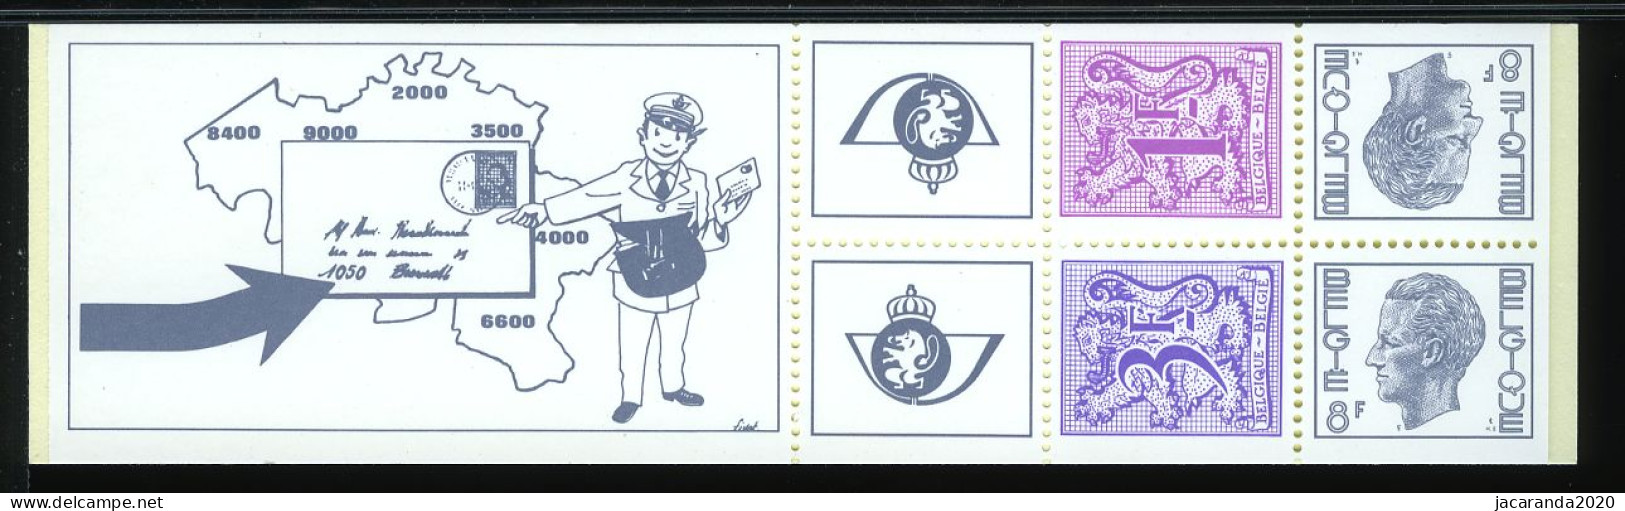 België B15 - Koning Boudewijn - Cijfer Op Heraldieke Leeuw - Roi Baudouin - Chiffre Sur Lion Héraldique - 1978 - 1953-2006 Modernes [B]